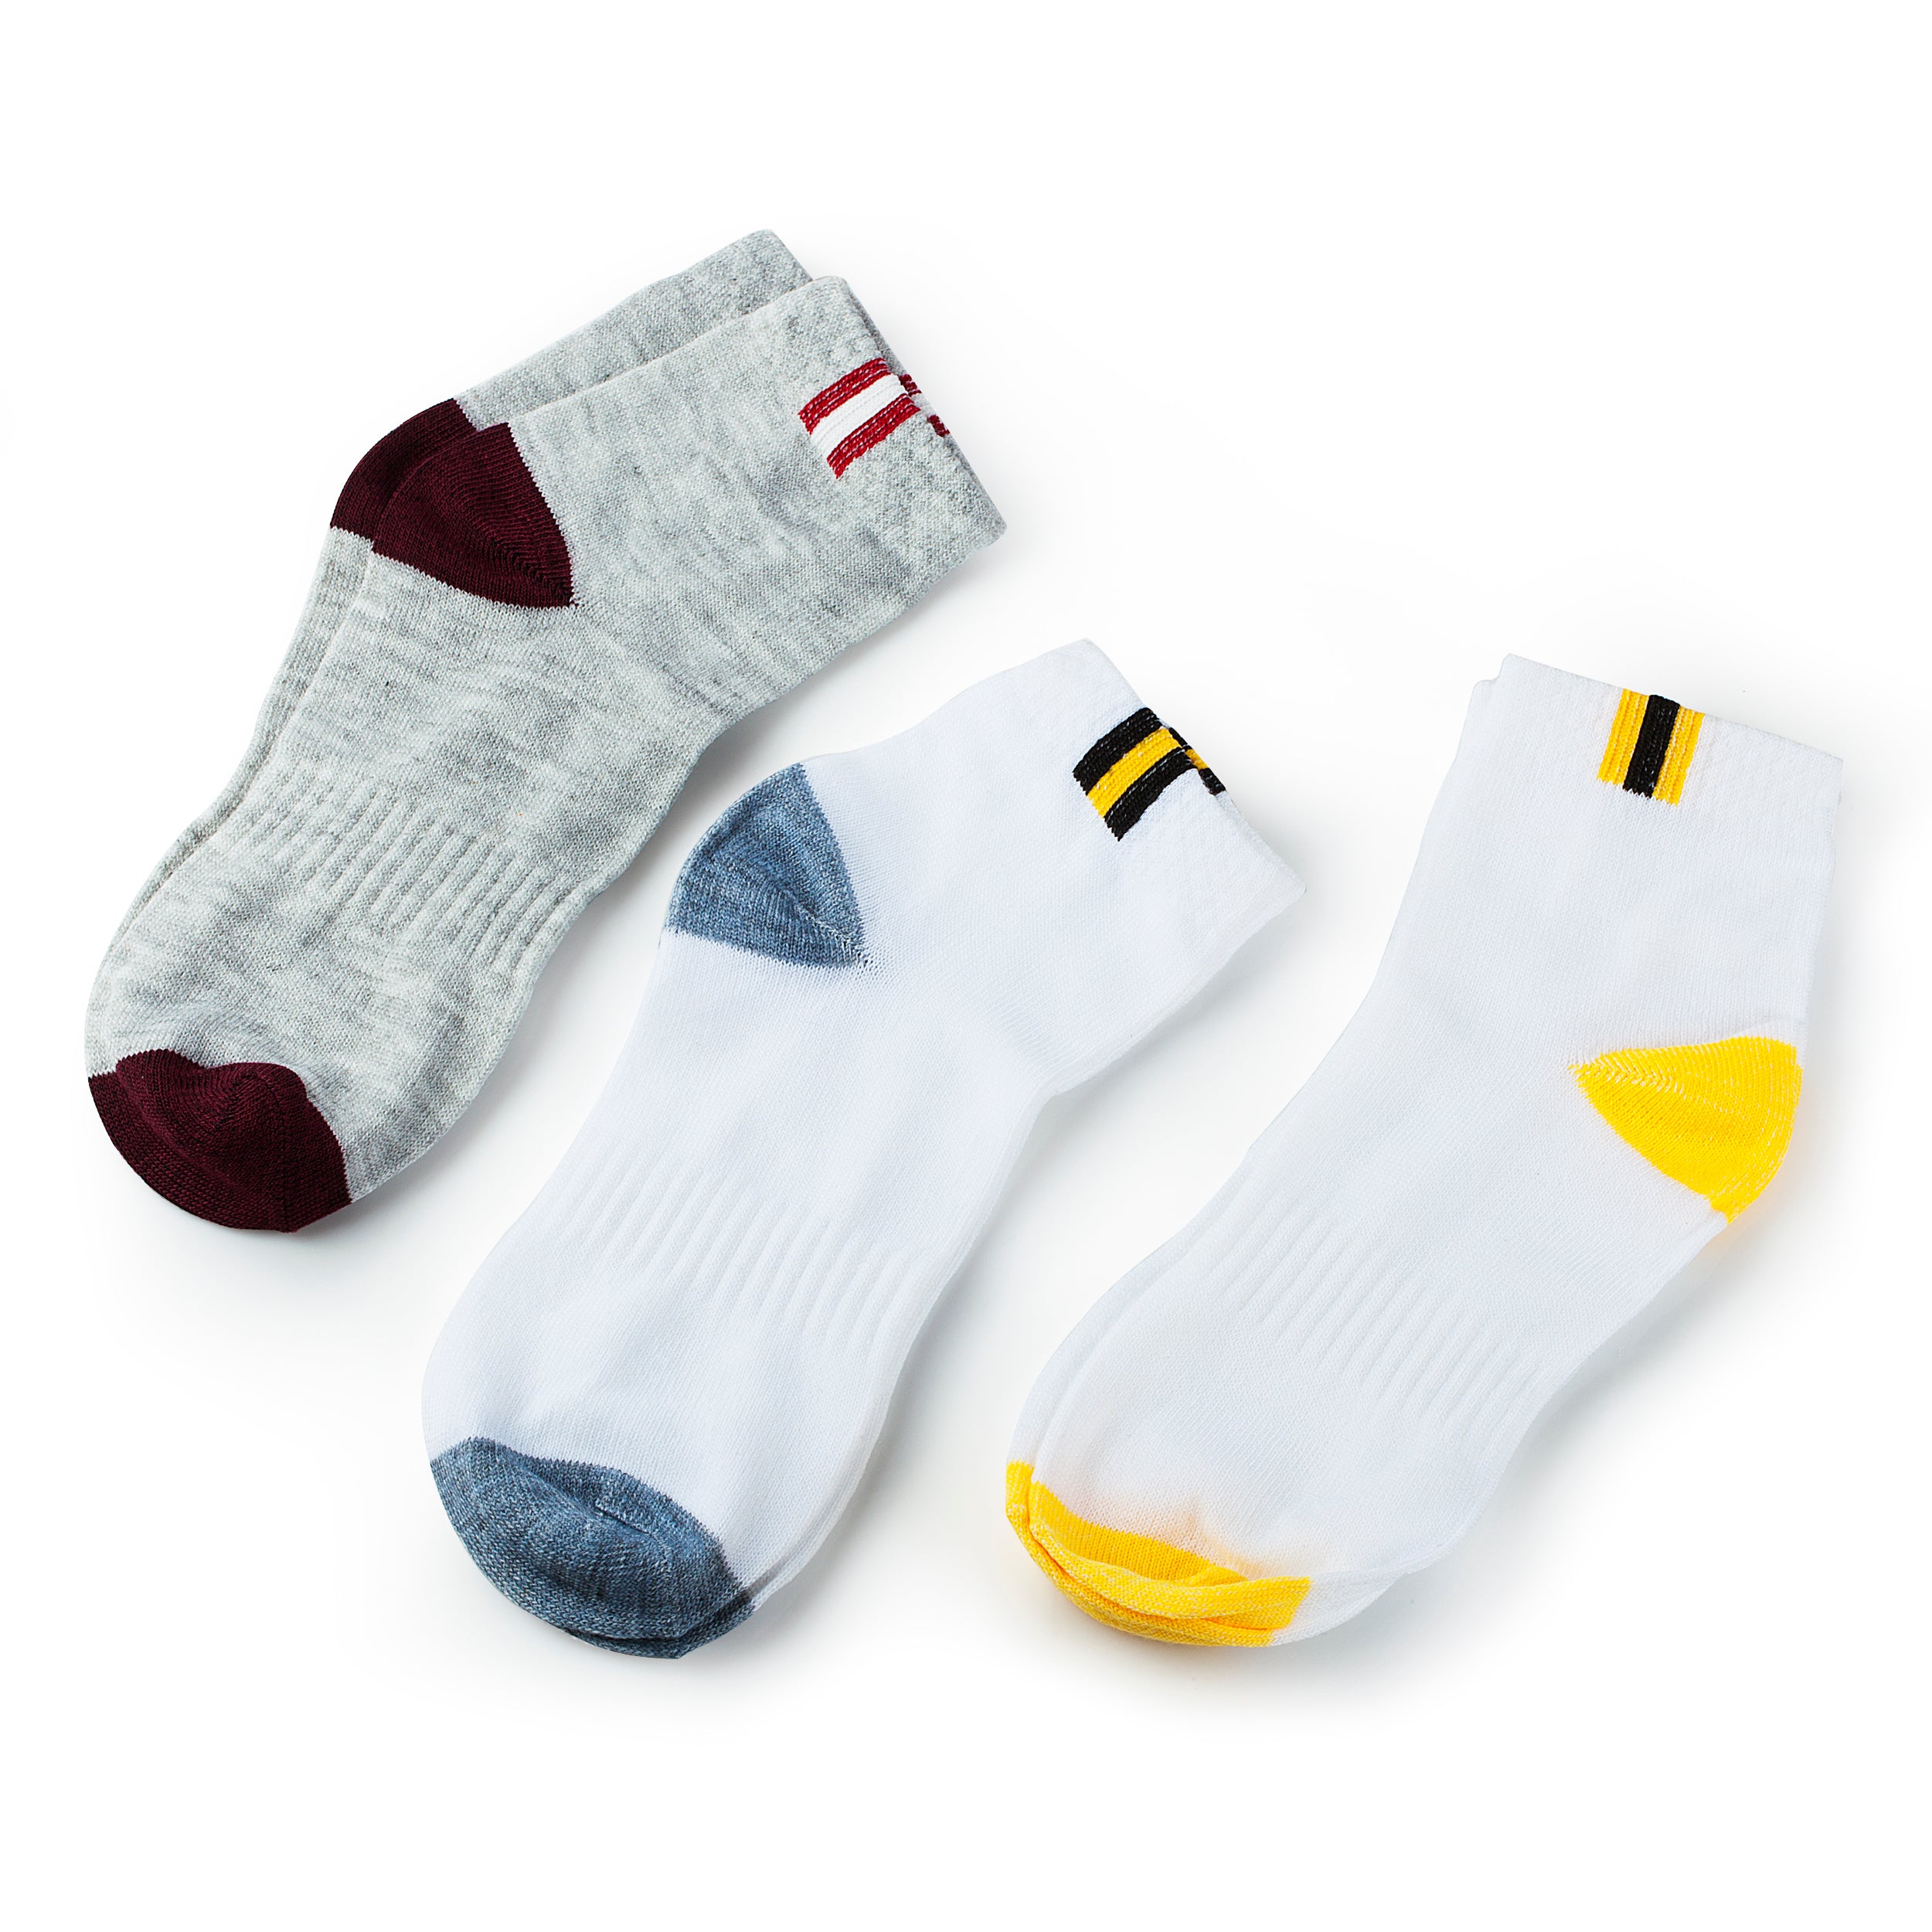 Socks - Kid's Size 4-8 Multi-Pack Polyester/Cotton Socks (10 Pairs)